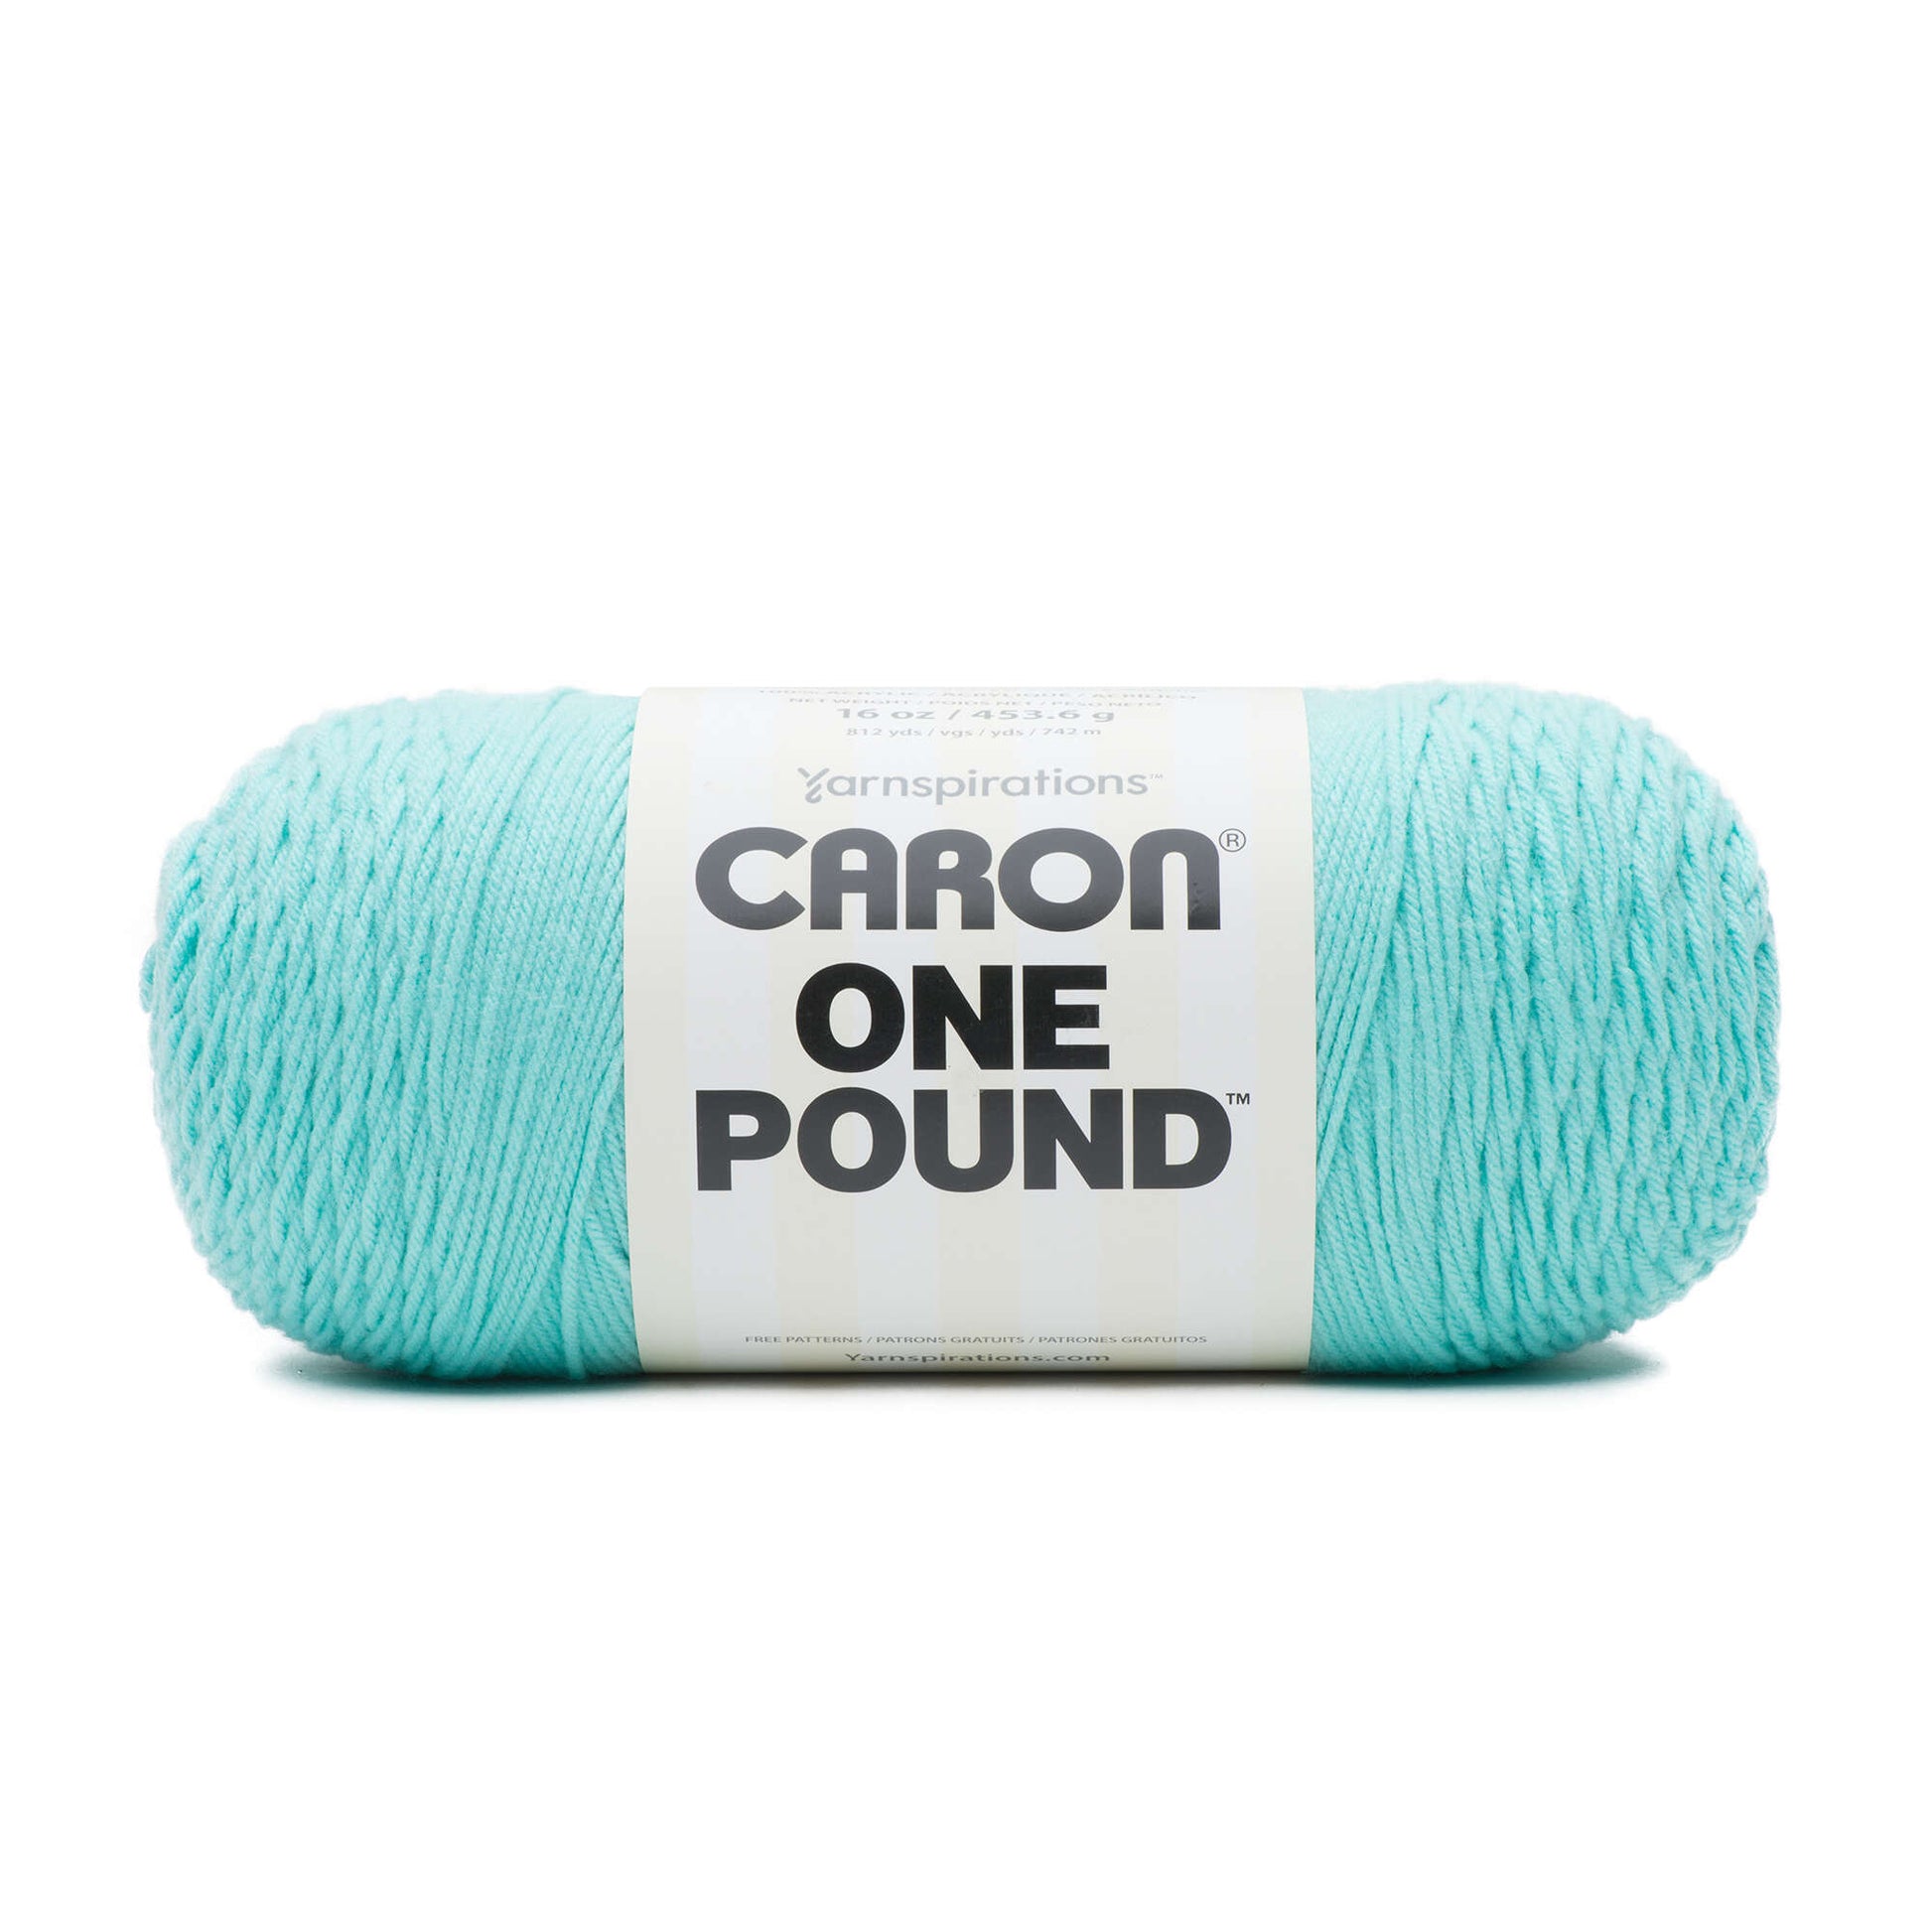 Caron One Pound Yarn, Medium 4 / 16 Oz / 453.6 G Deep Violet 